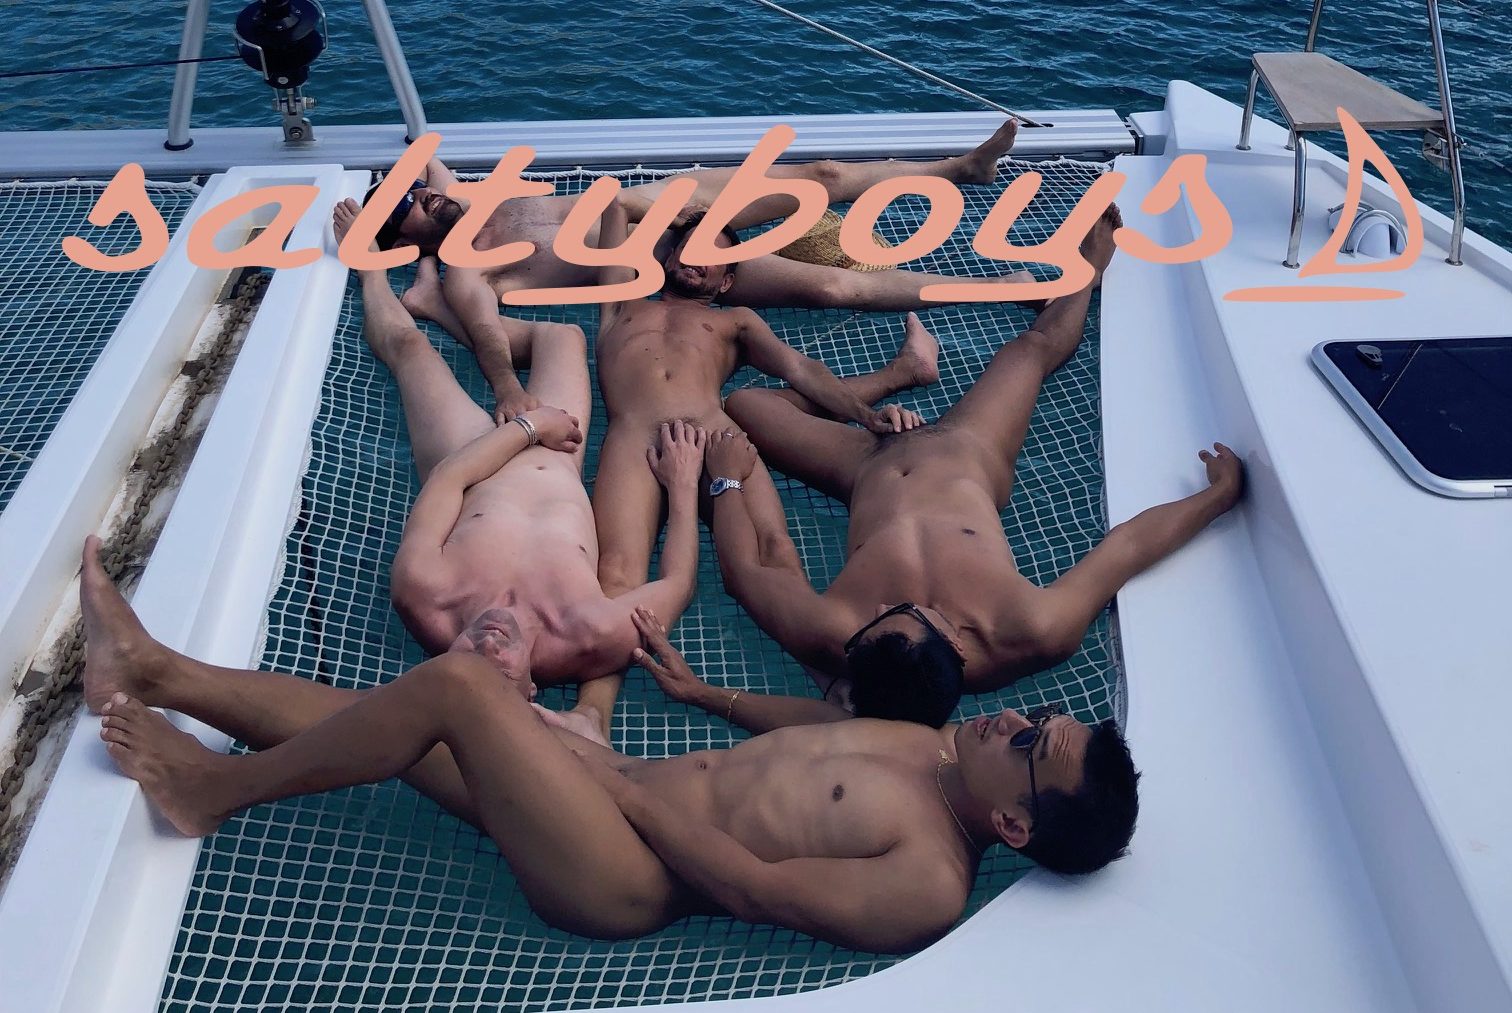 Saltyboys Gay Nude Sailing Cruises naked in nett male bonding on catamaran